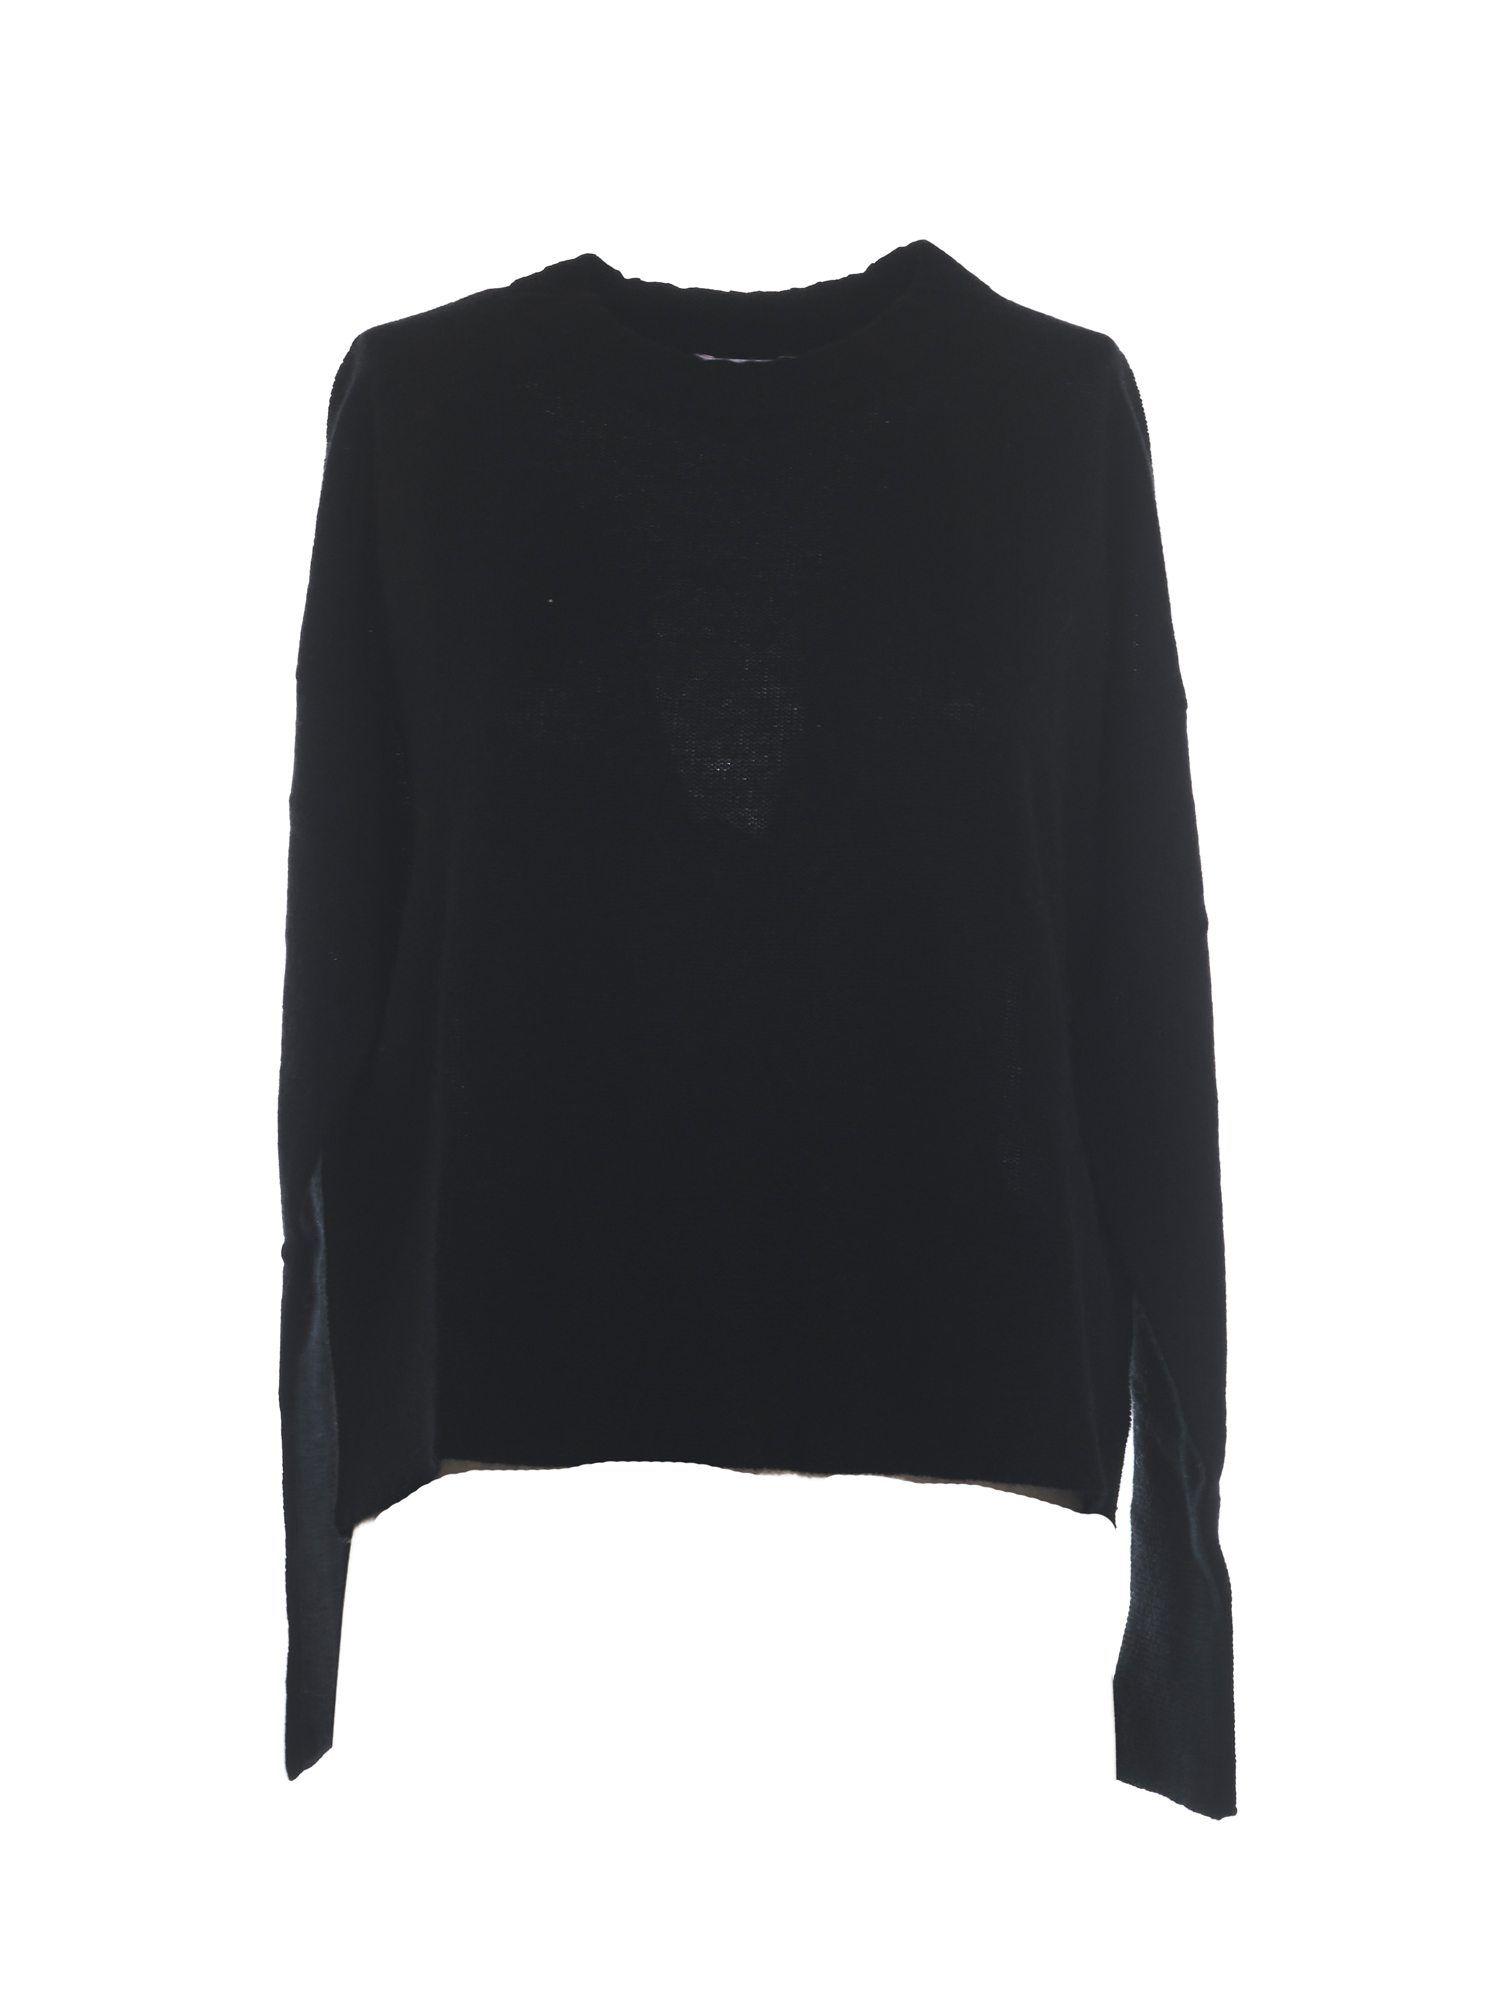 Brodie Cashmere Cashmere Sweater in Black | Lyst